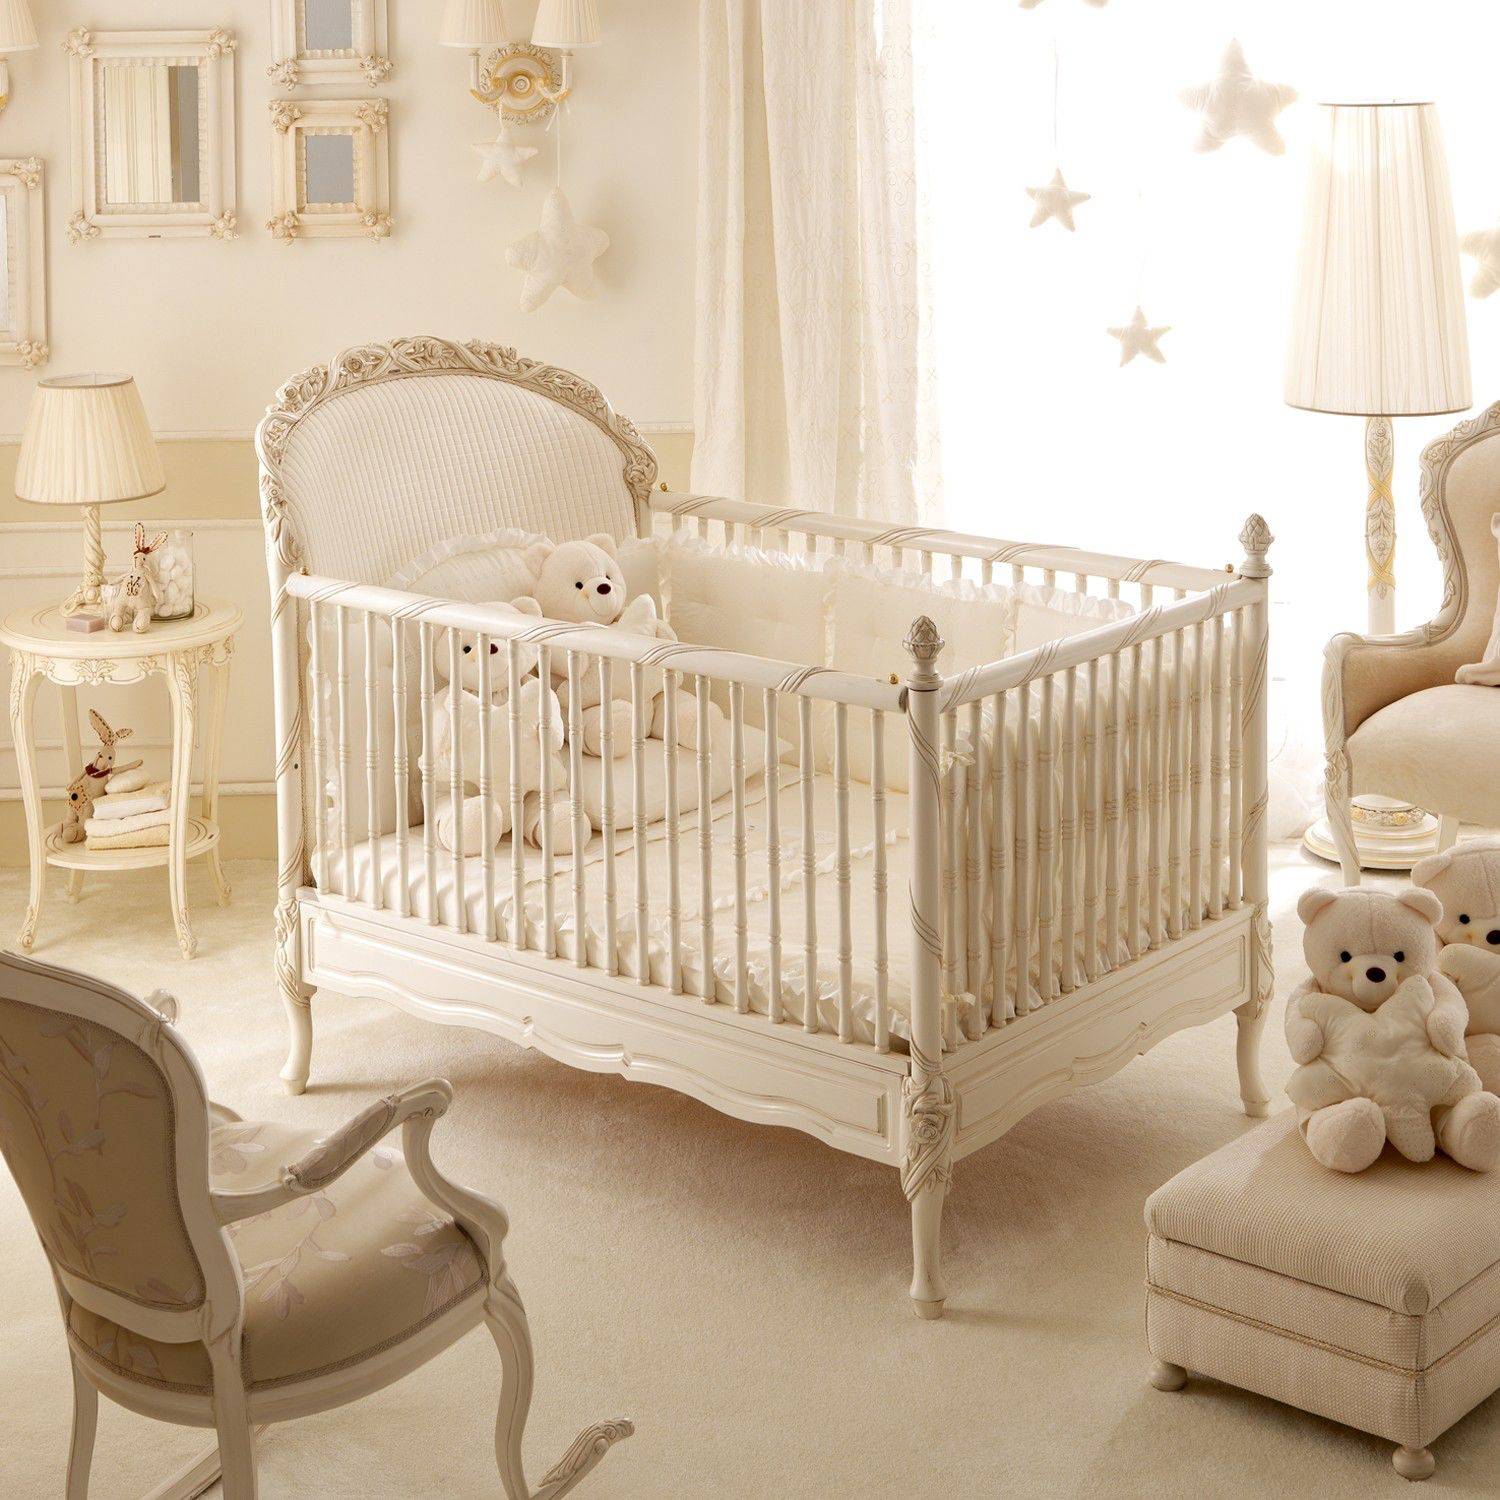 Unique Round Baby Beds With Luxury Interior